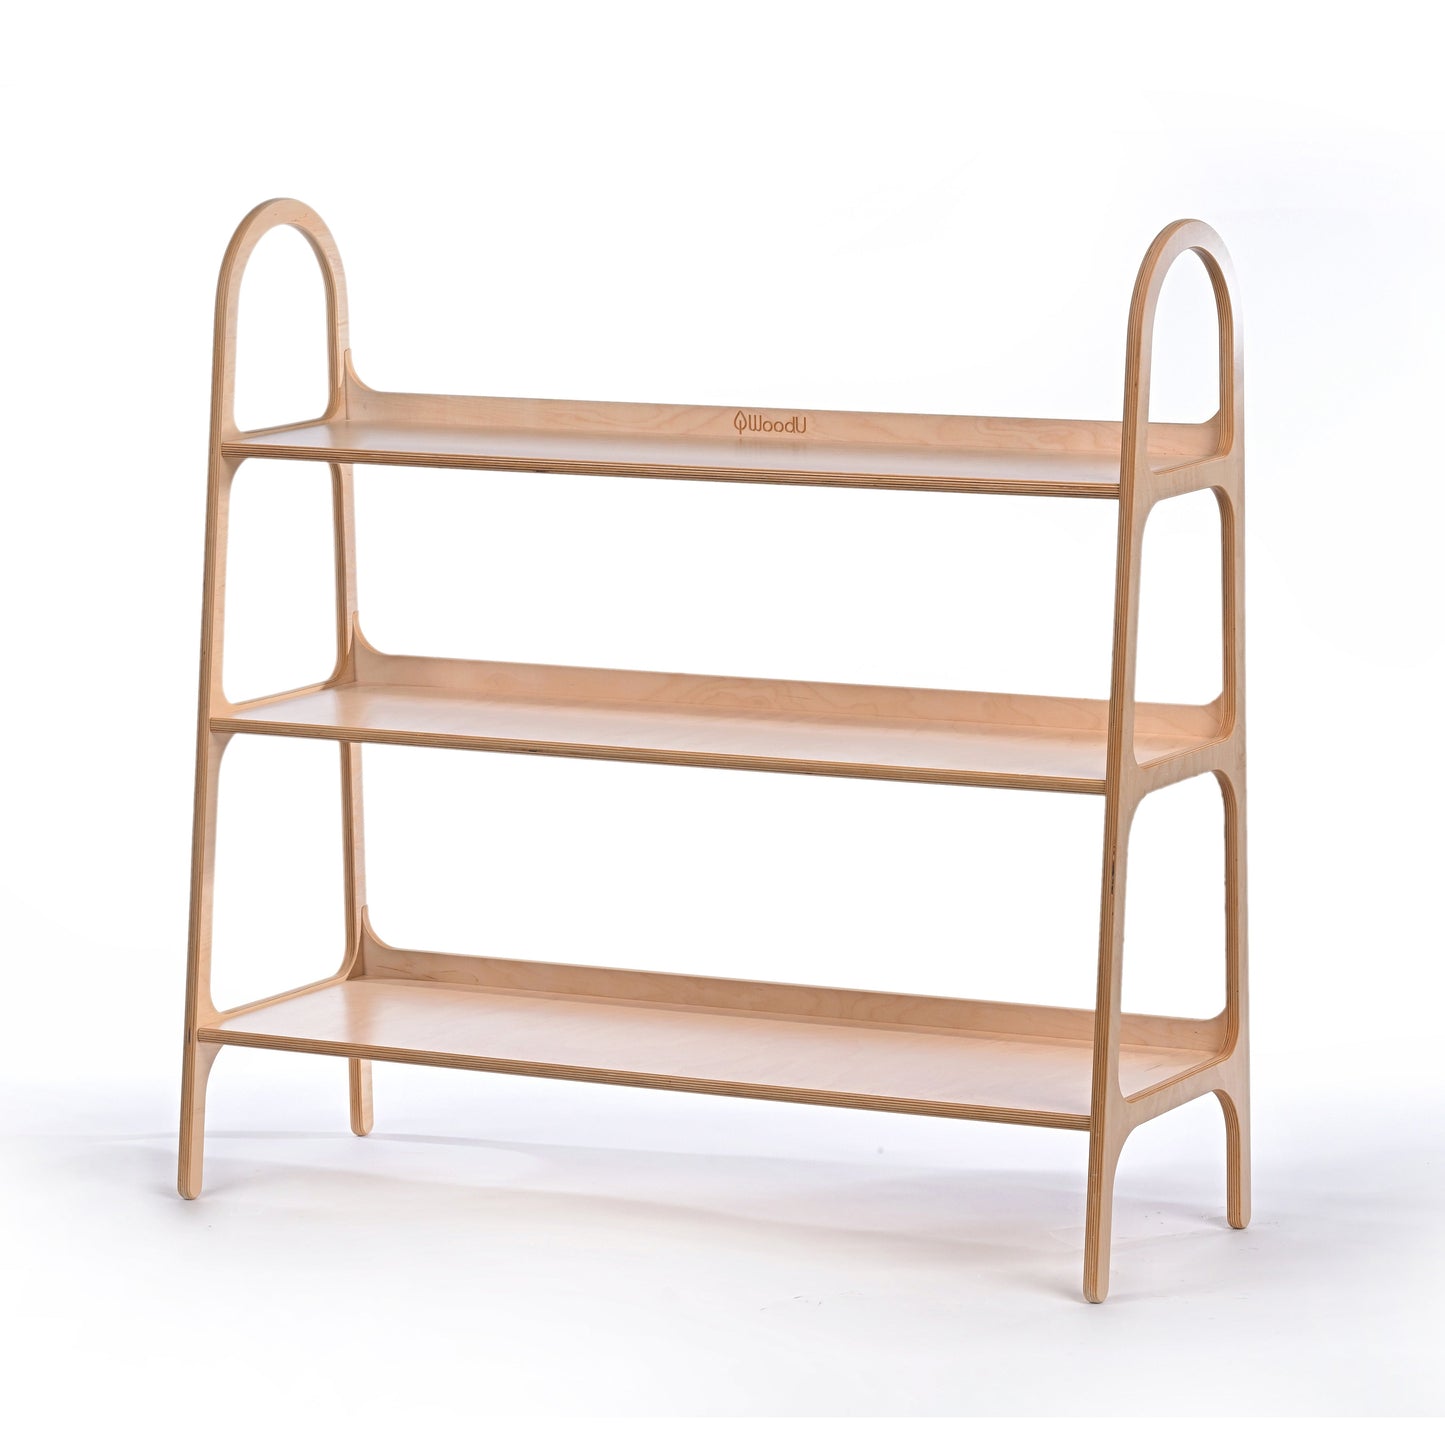 OUTLET The WoodU Shelf - 3 shelves